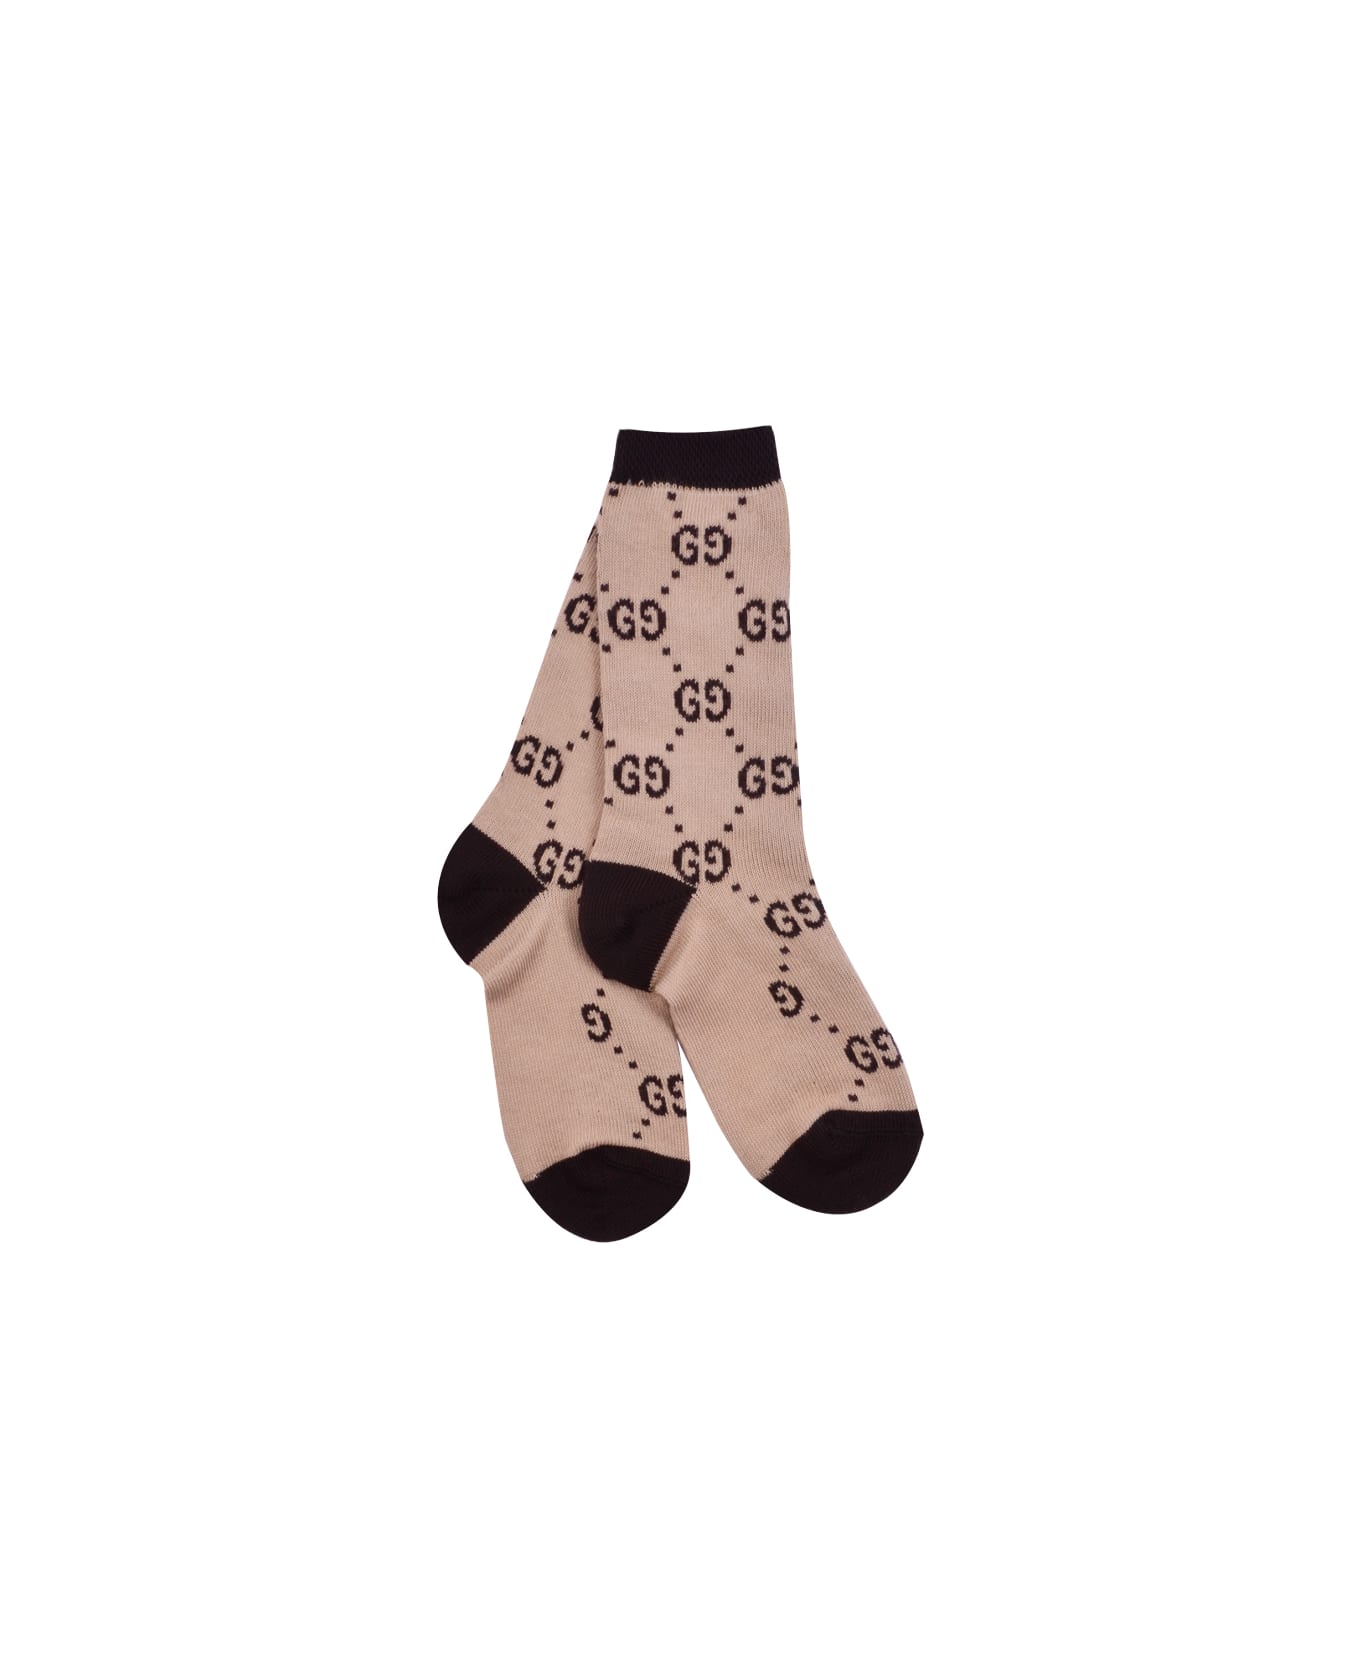 Gucci Eyewear Cotton Gg Socks - Brown